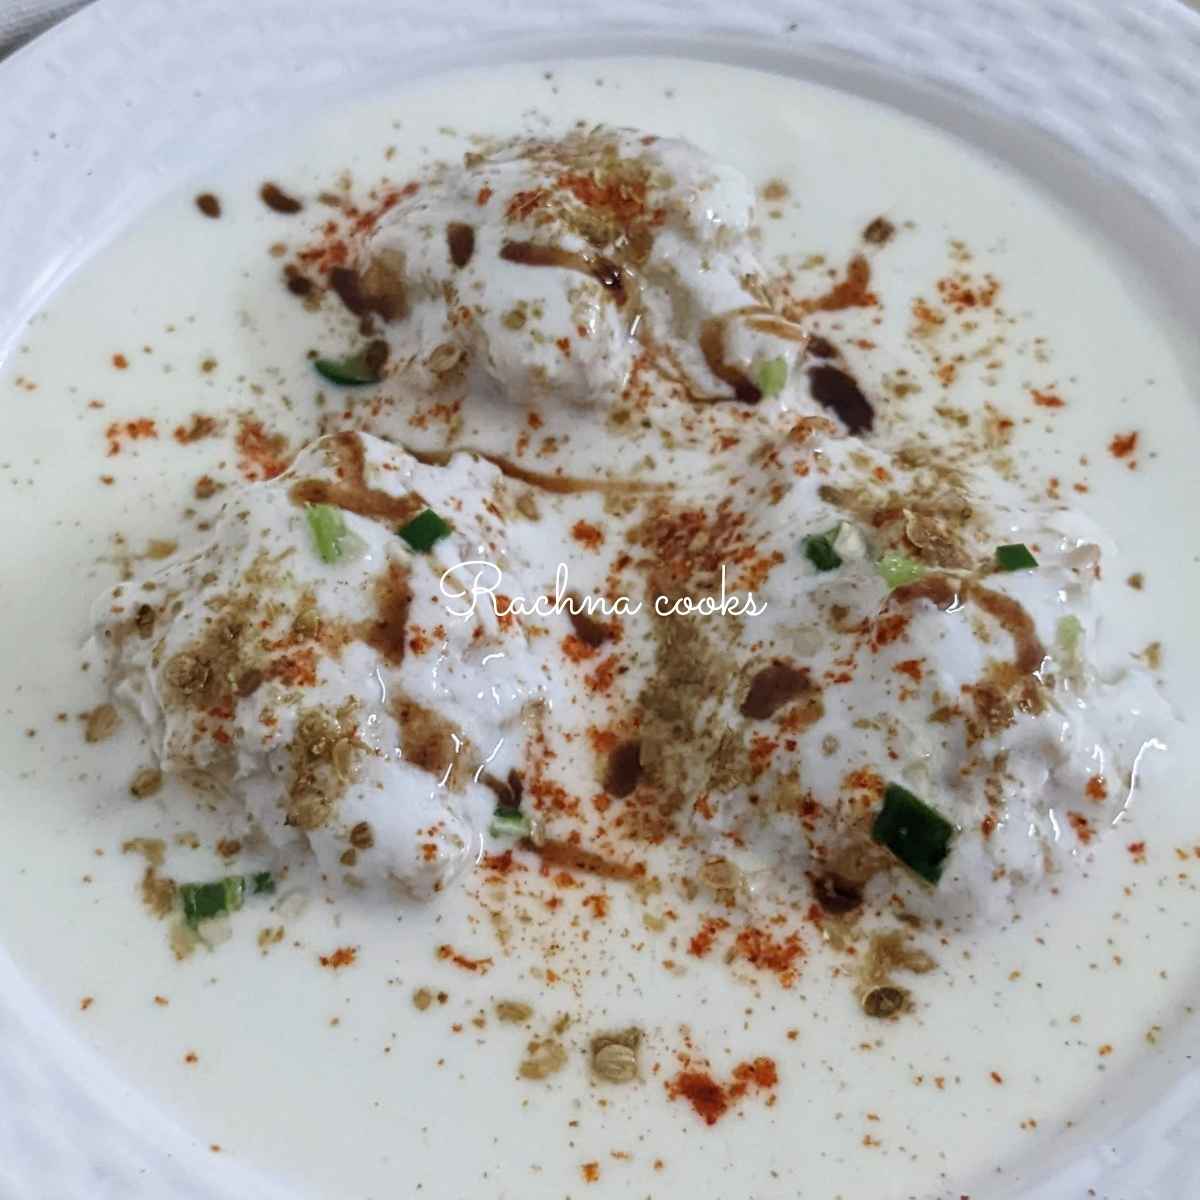 Dahi vadas served on a white plate.